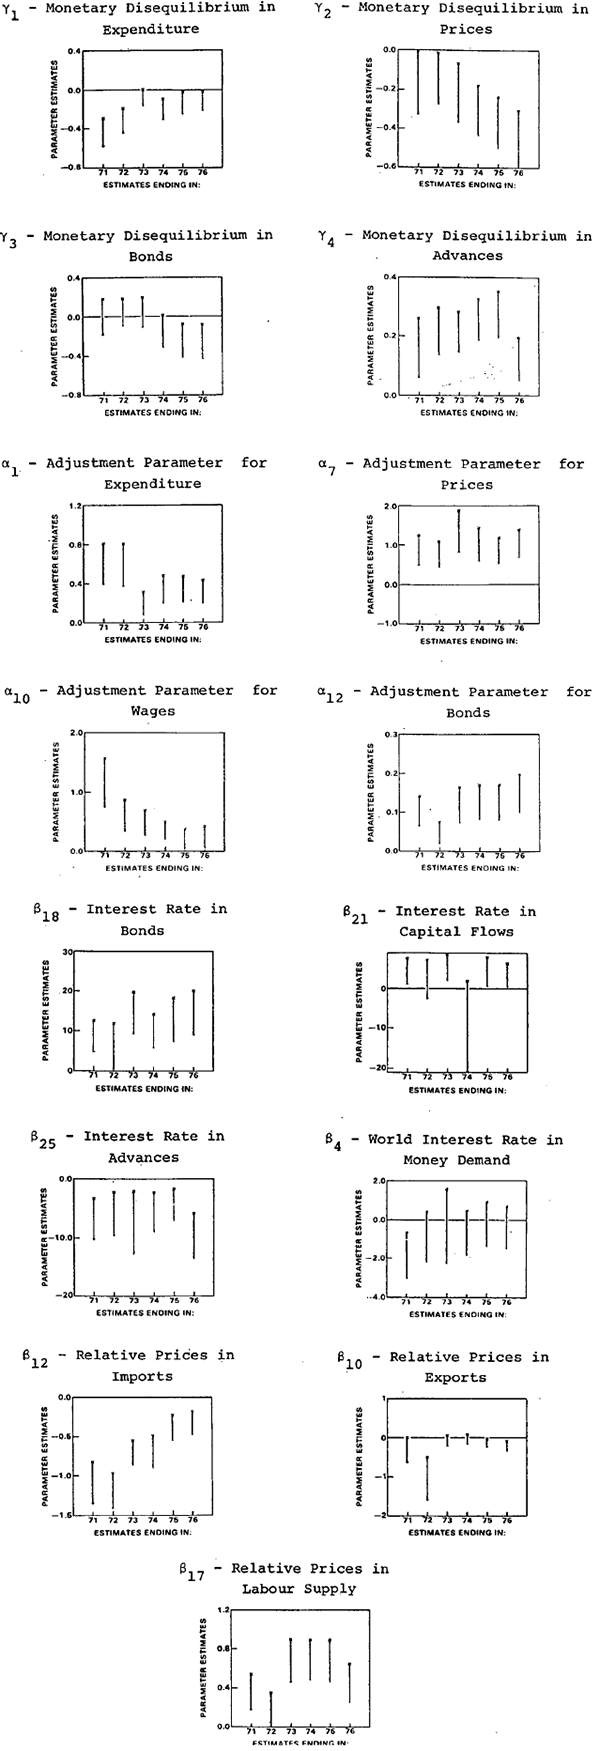 Figure 1: Behaviour of Individual Parameters